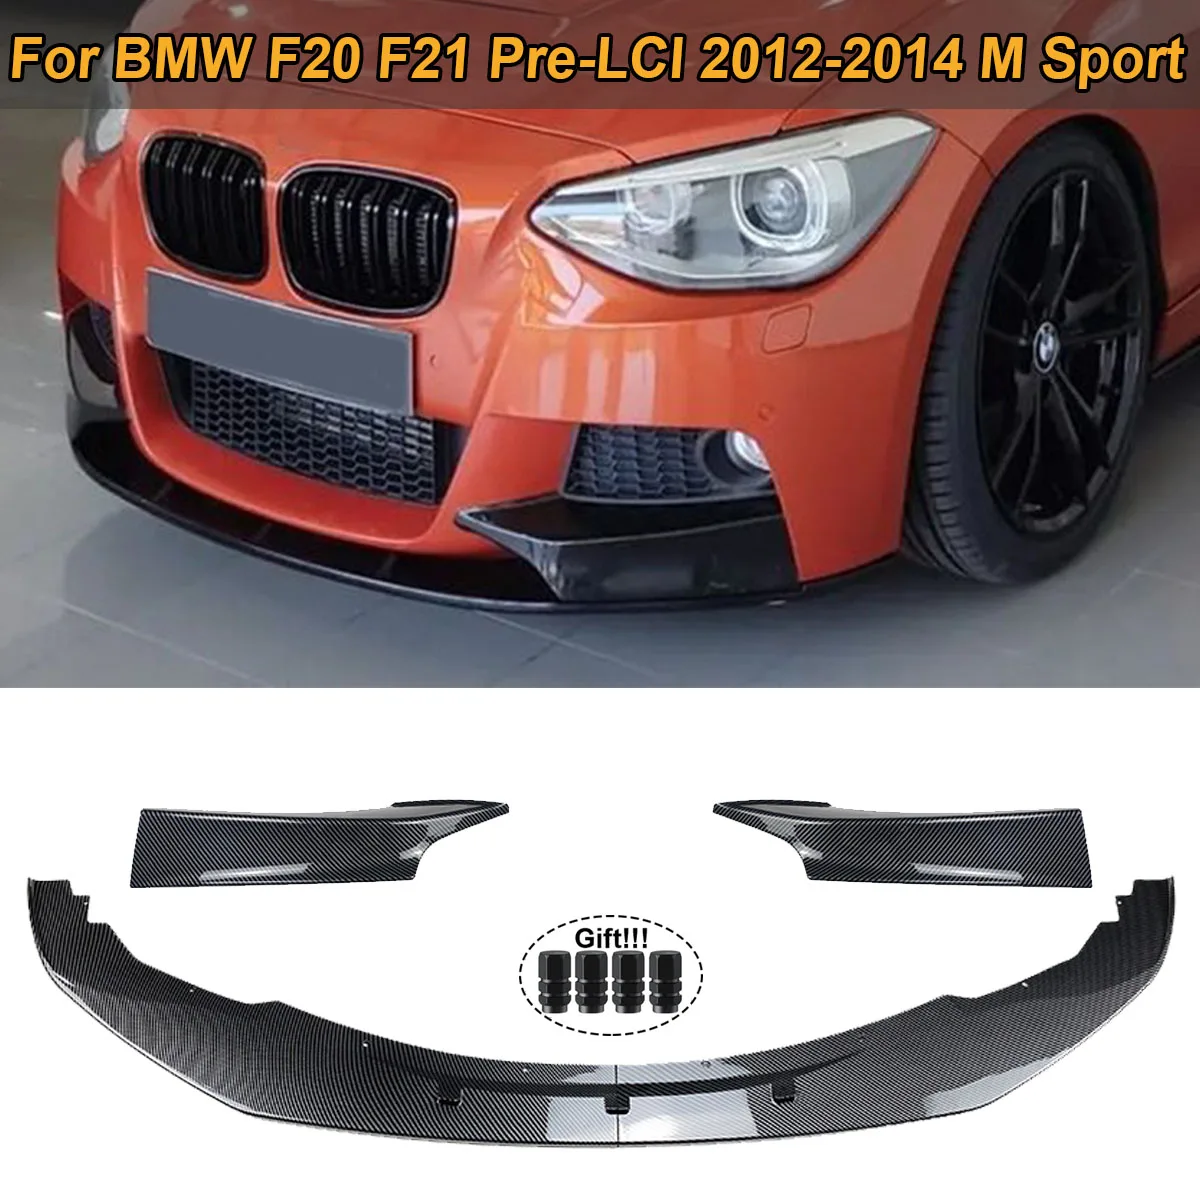 Front Bumper Lip Spoiler + Side Splitter Canard Body Kit For BMW F20 F21 1 Series 135i Pre-LCI 2012-2014 M Sport Car Accessories